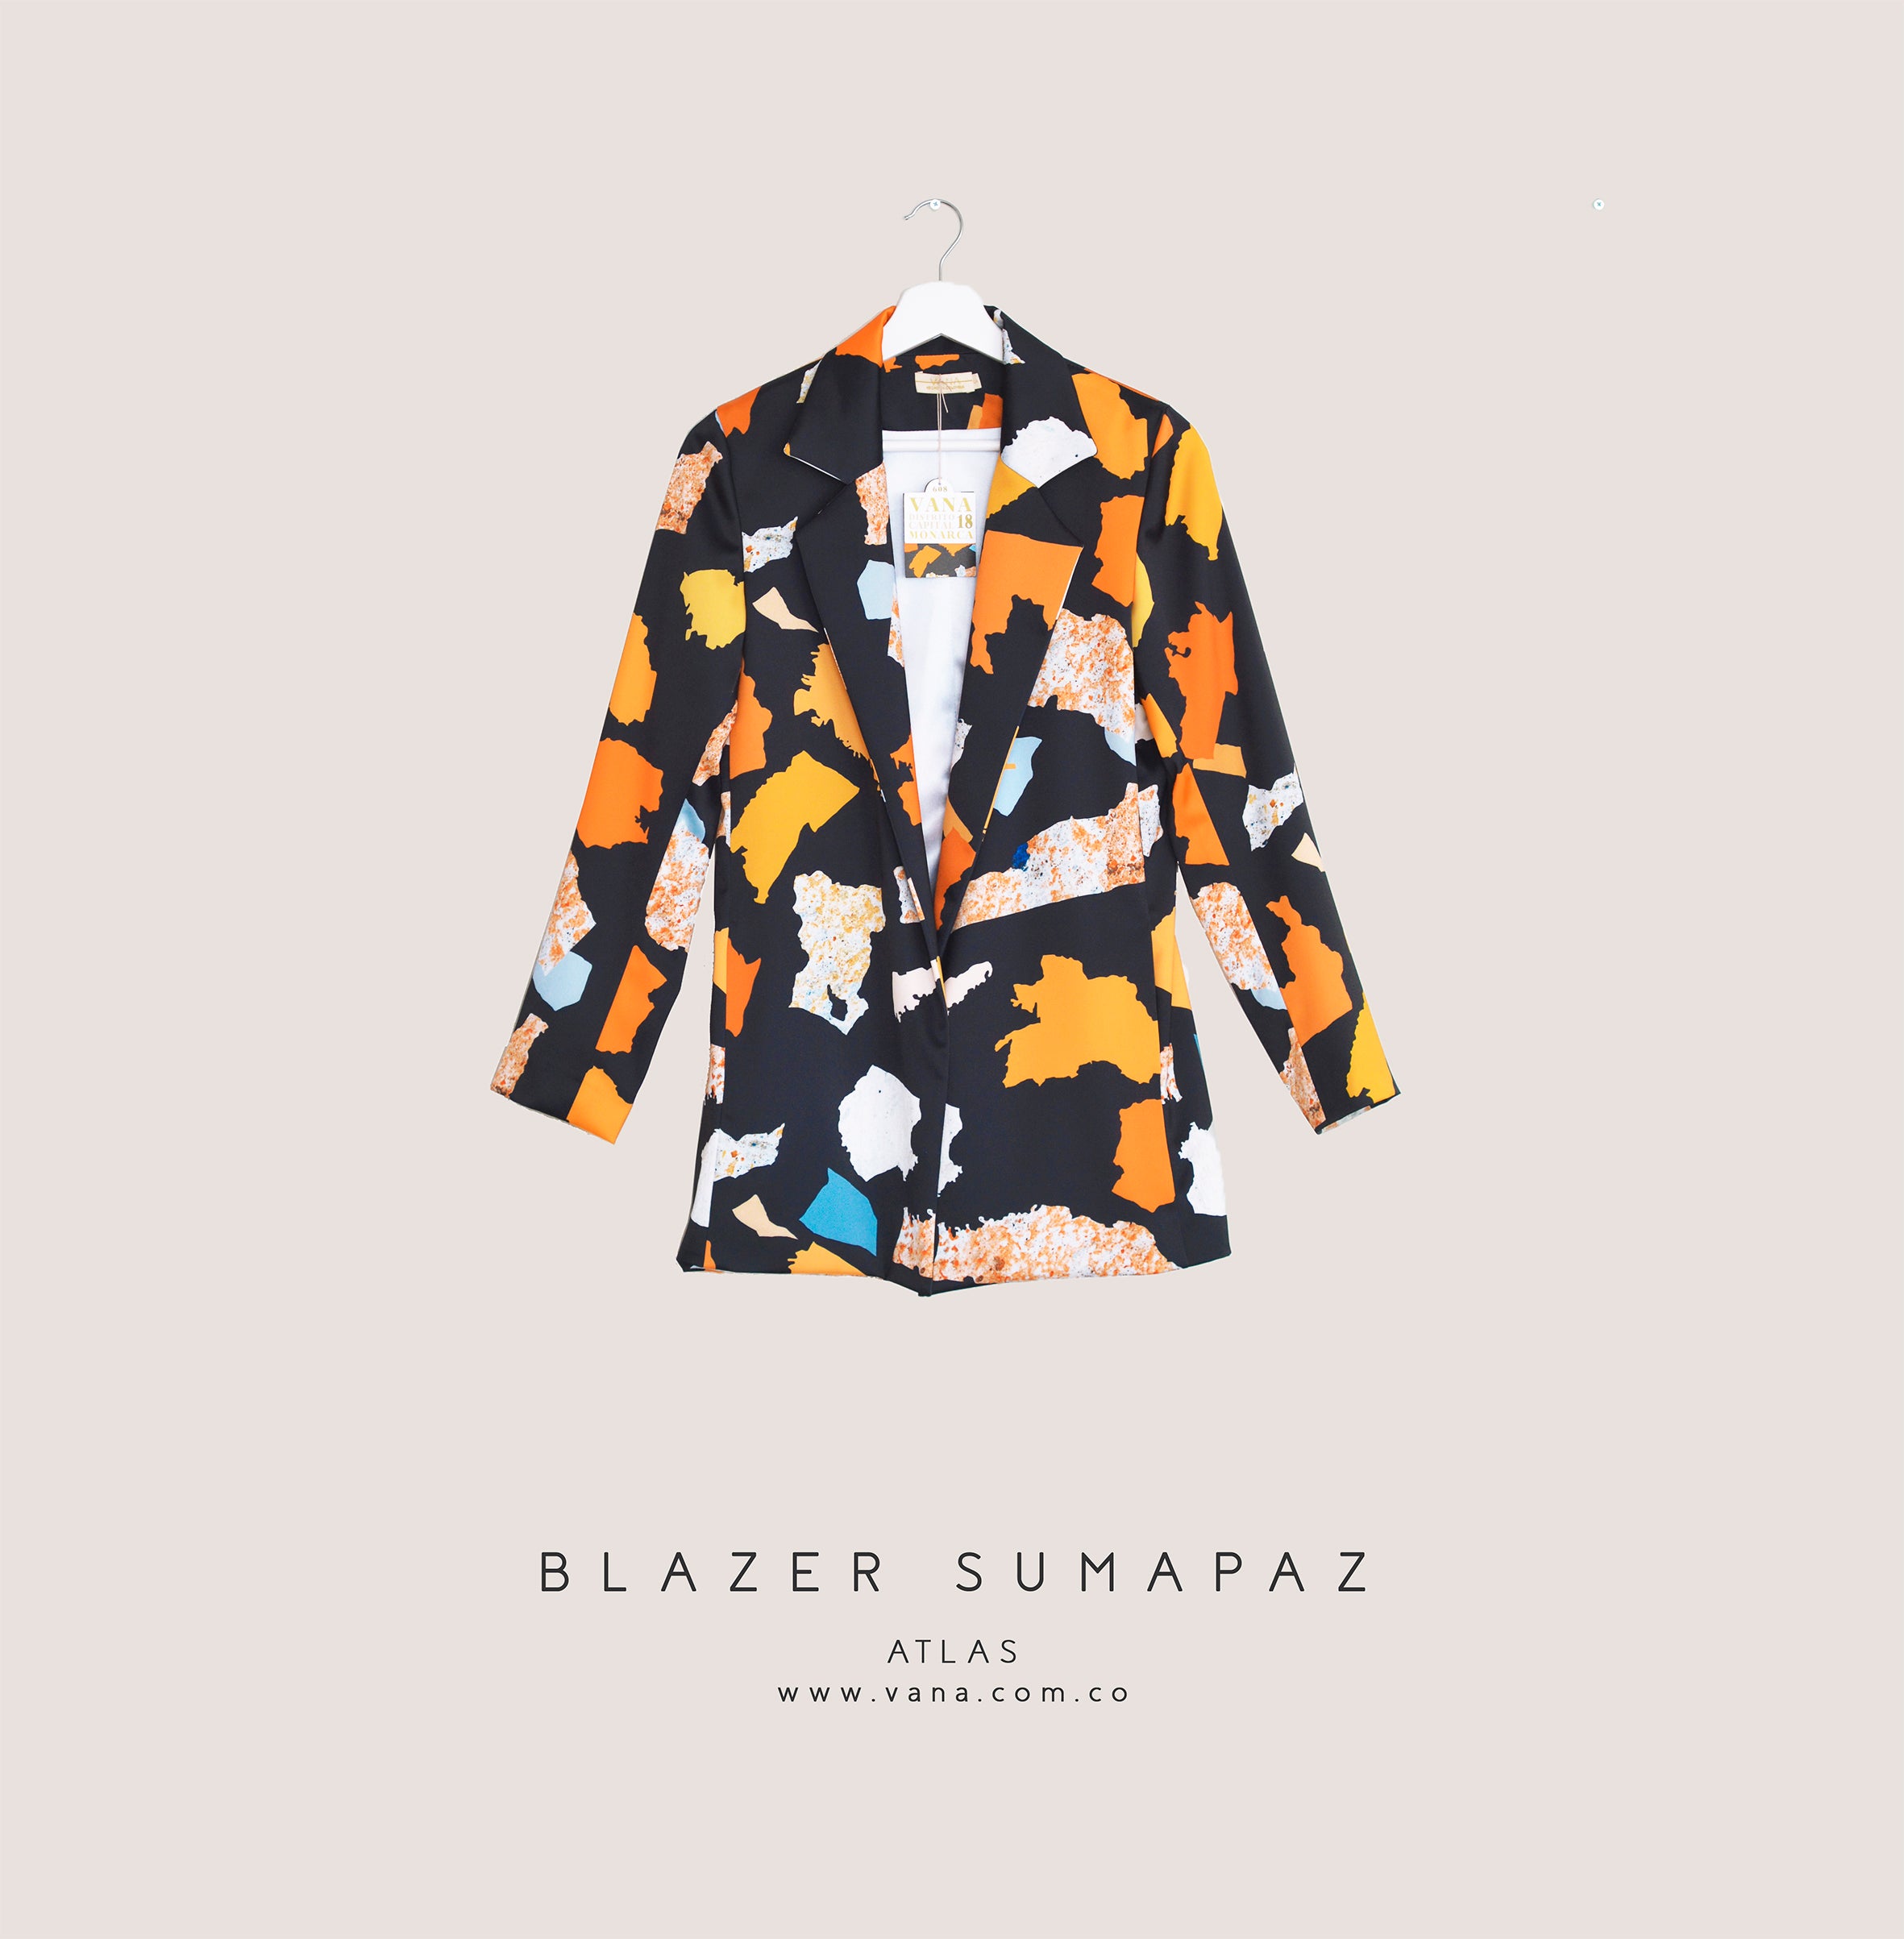 Blazer Sumapaz